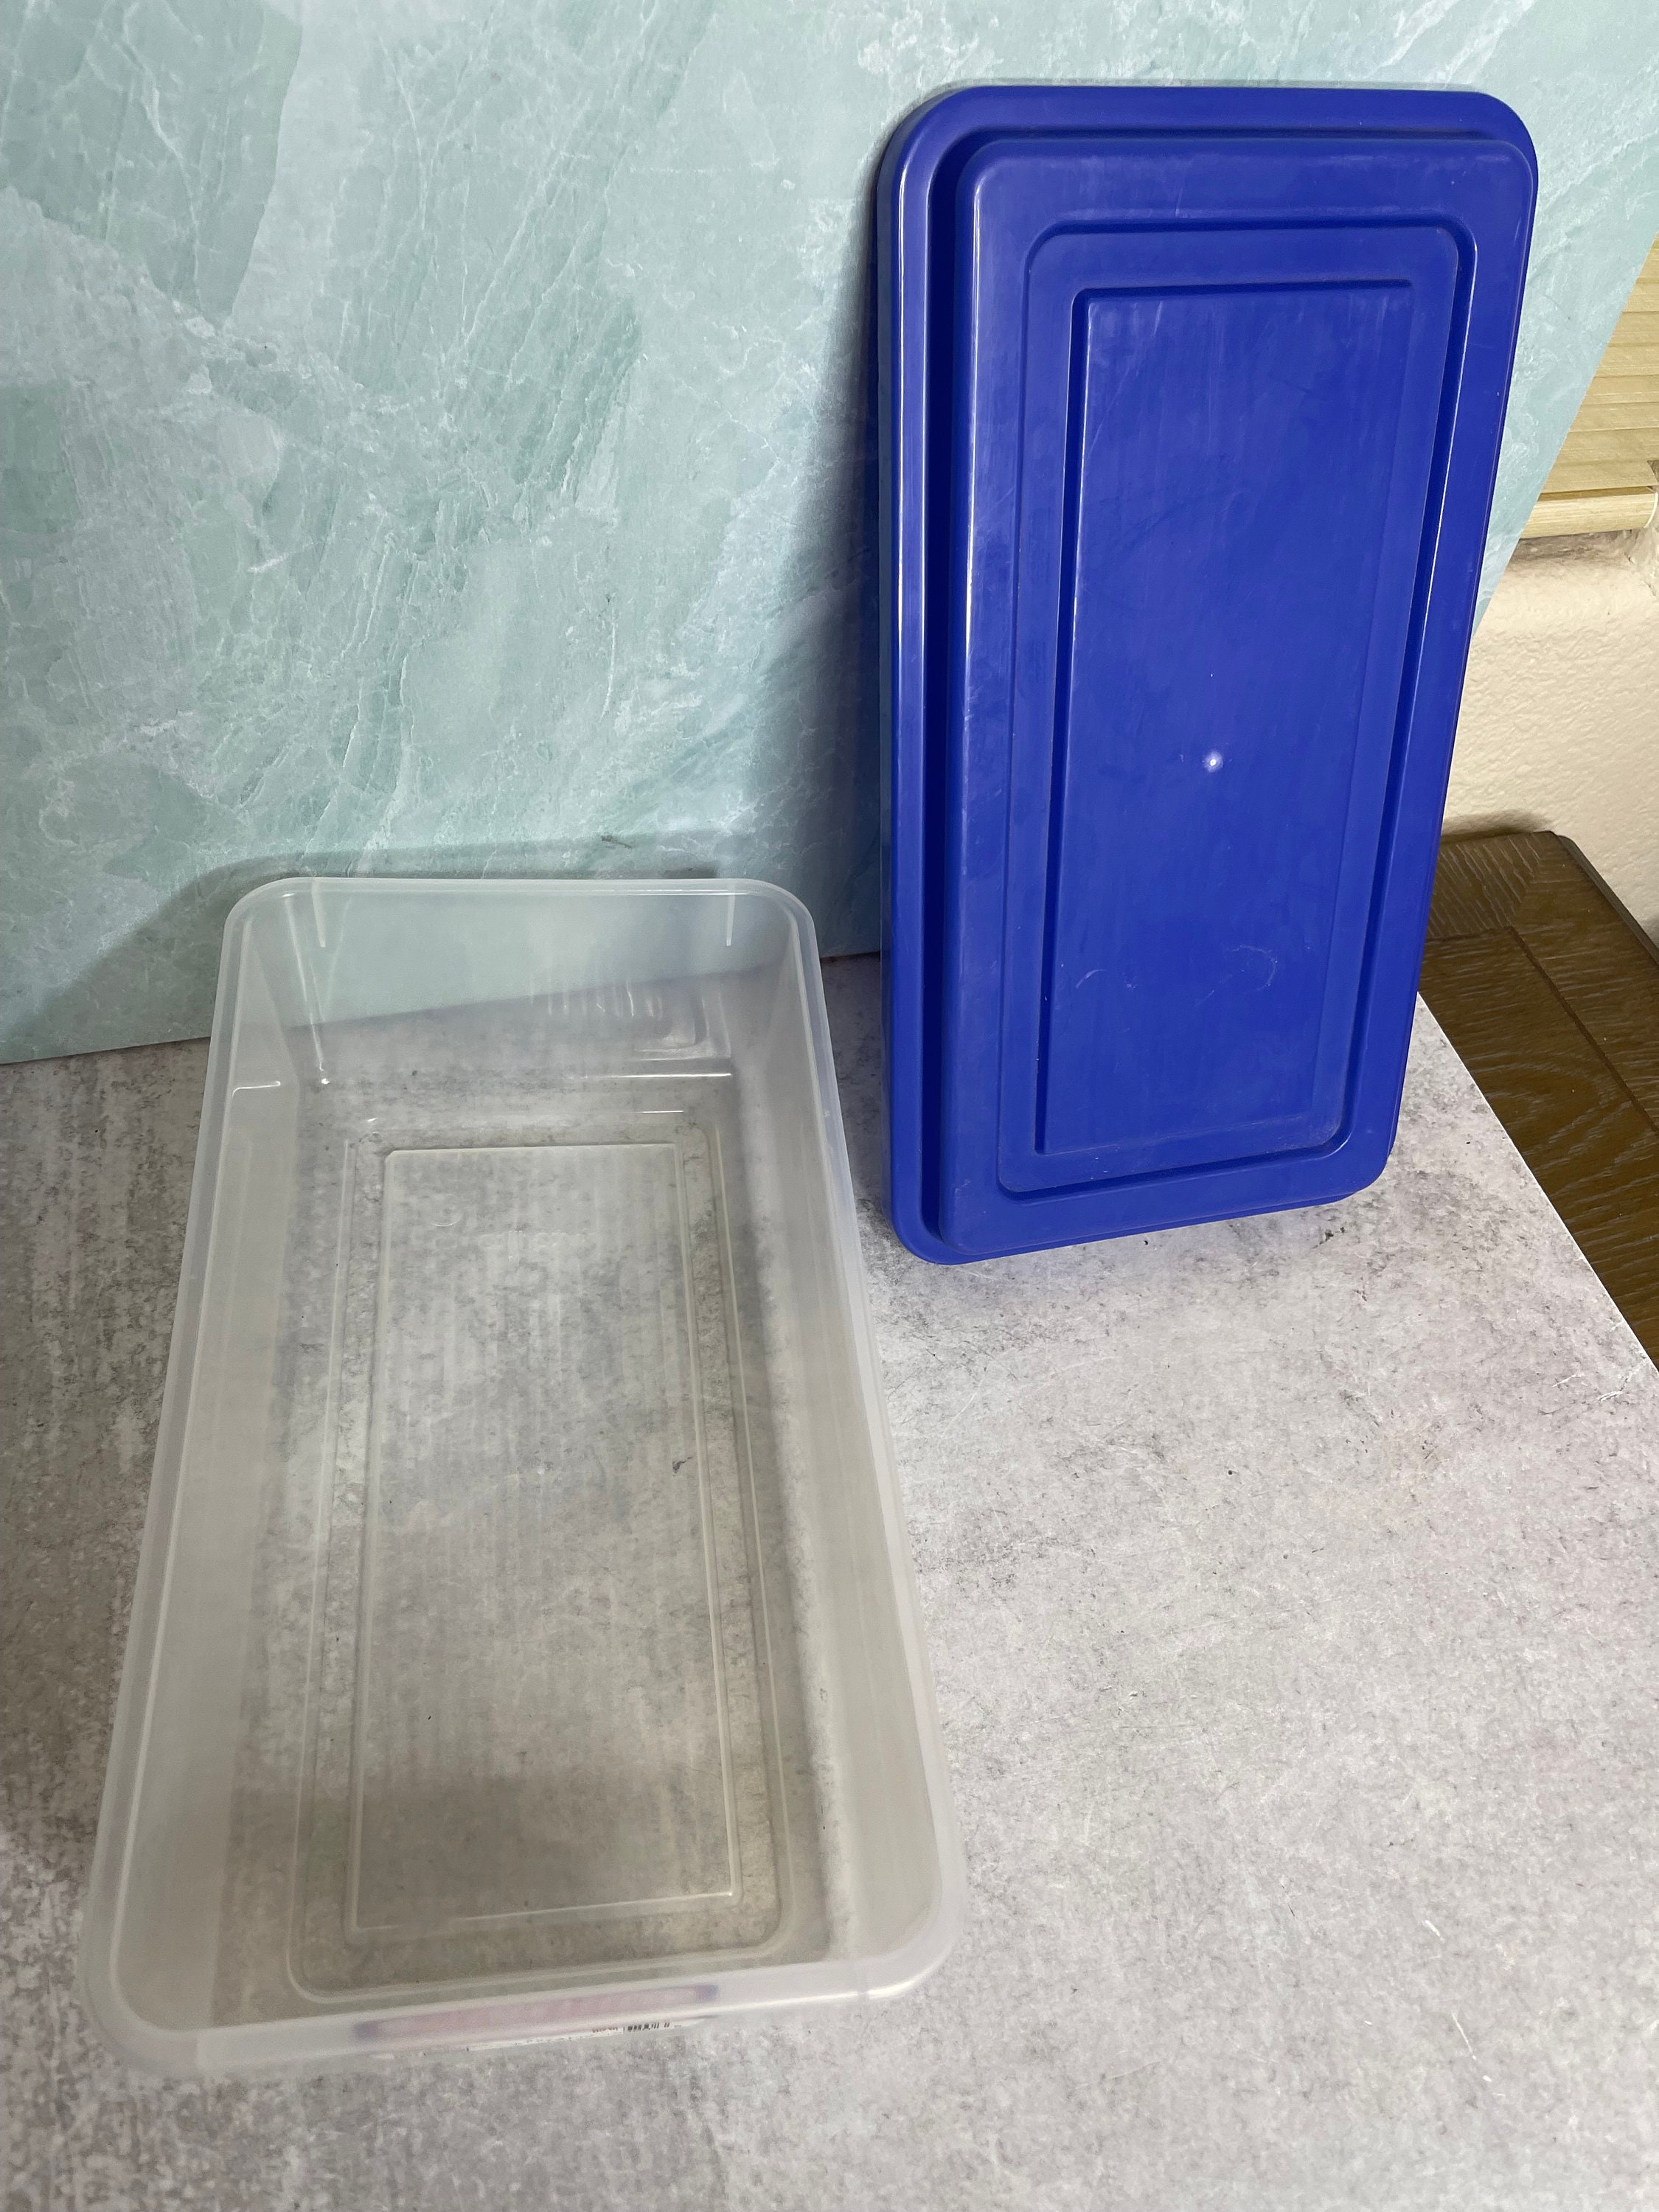 Vintage 1998 Sterilite 1652 Plastic Storage Box Container Blue Lid